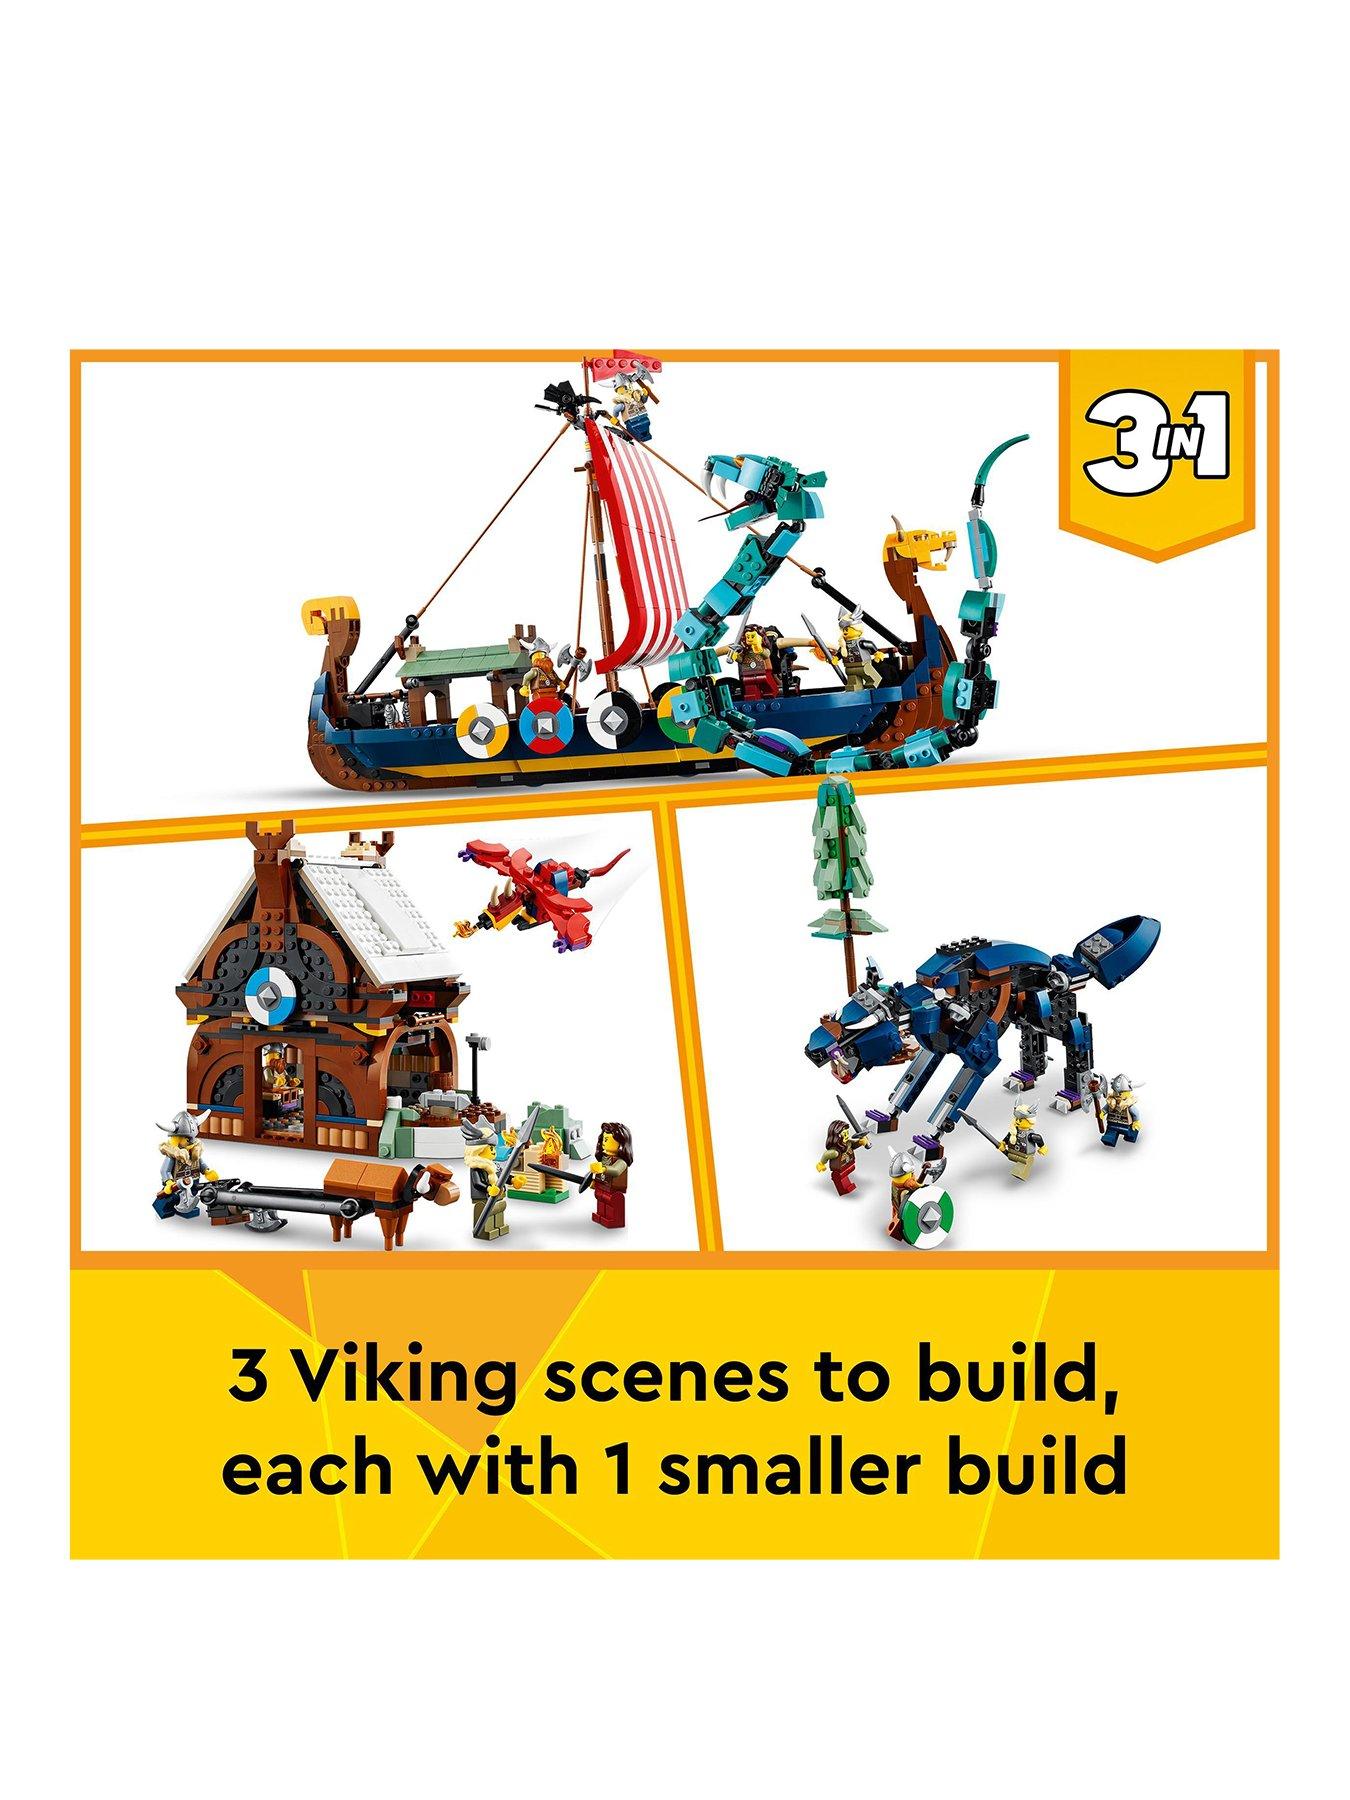 31132 Lego Viking Ship : r/lego